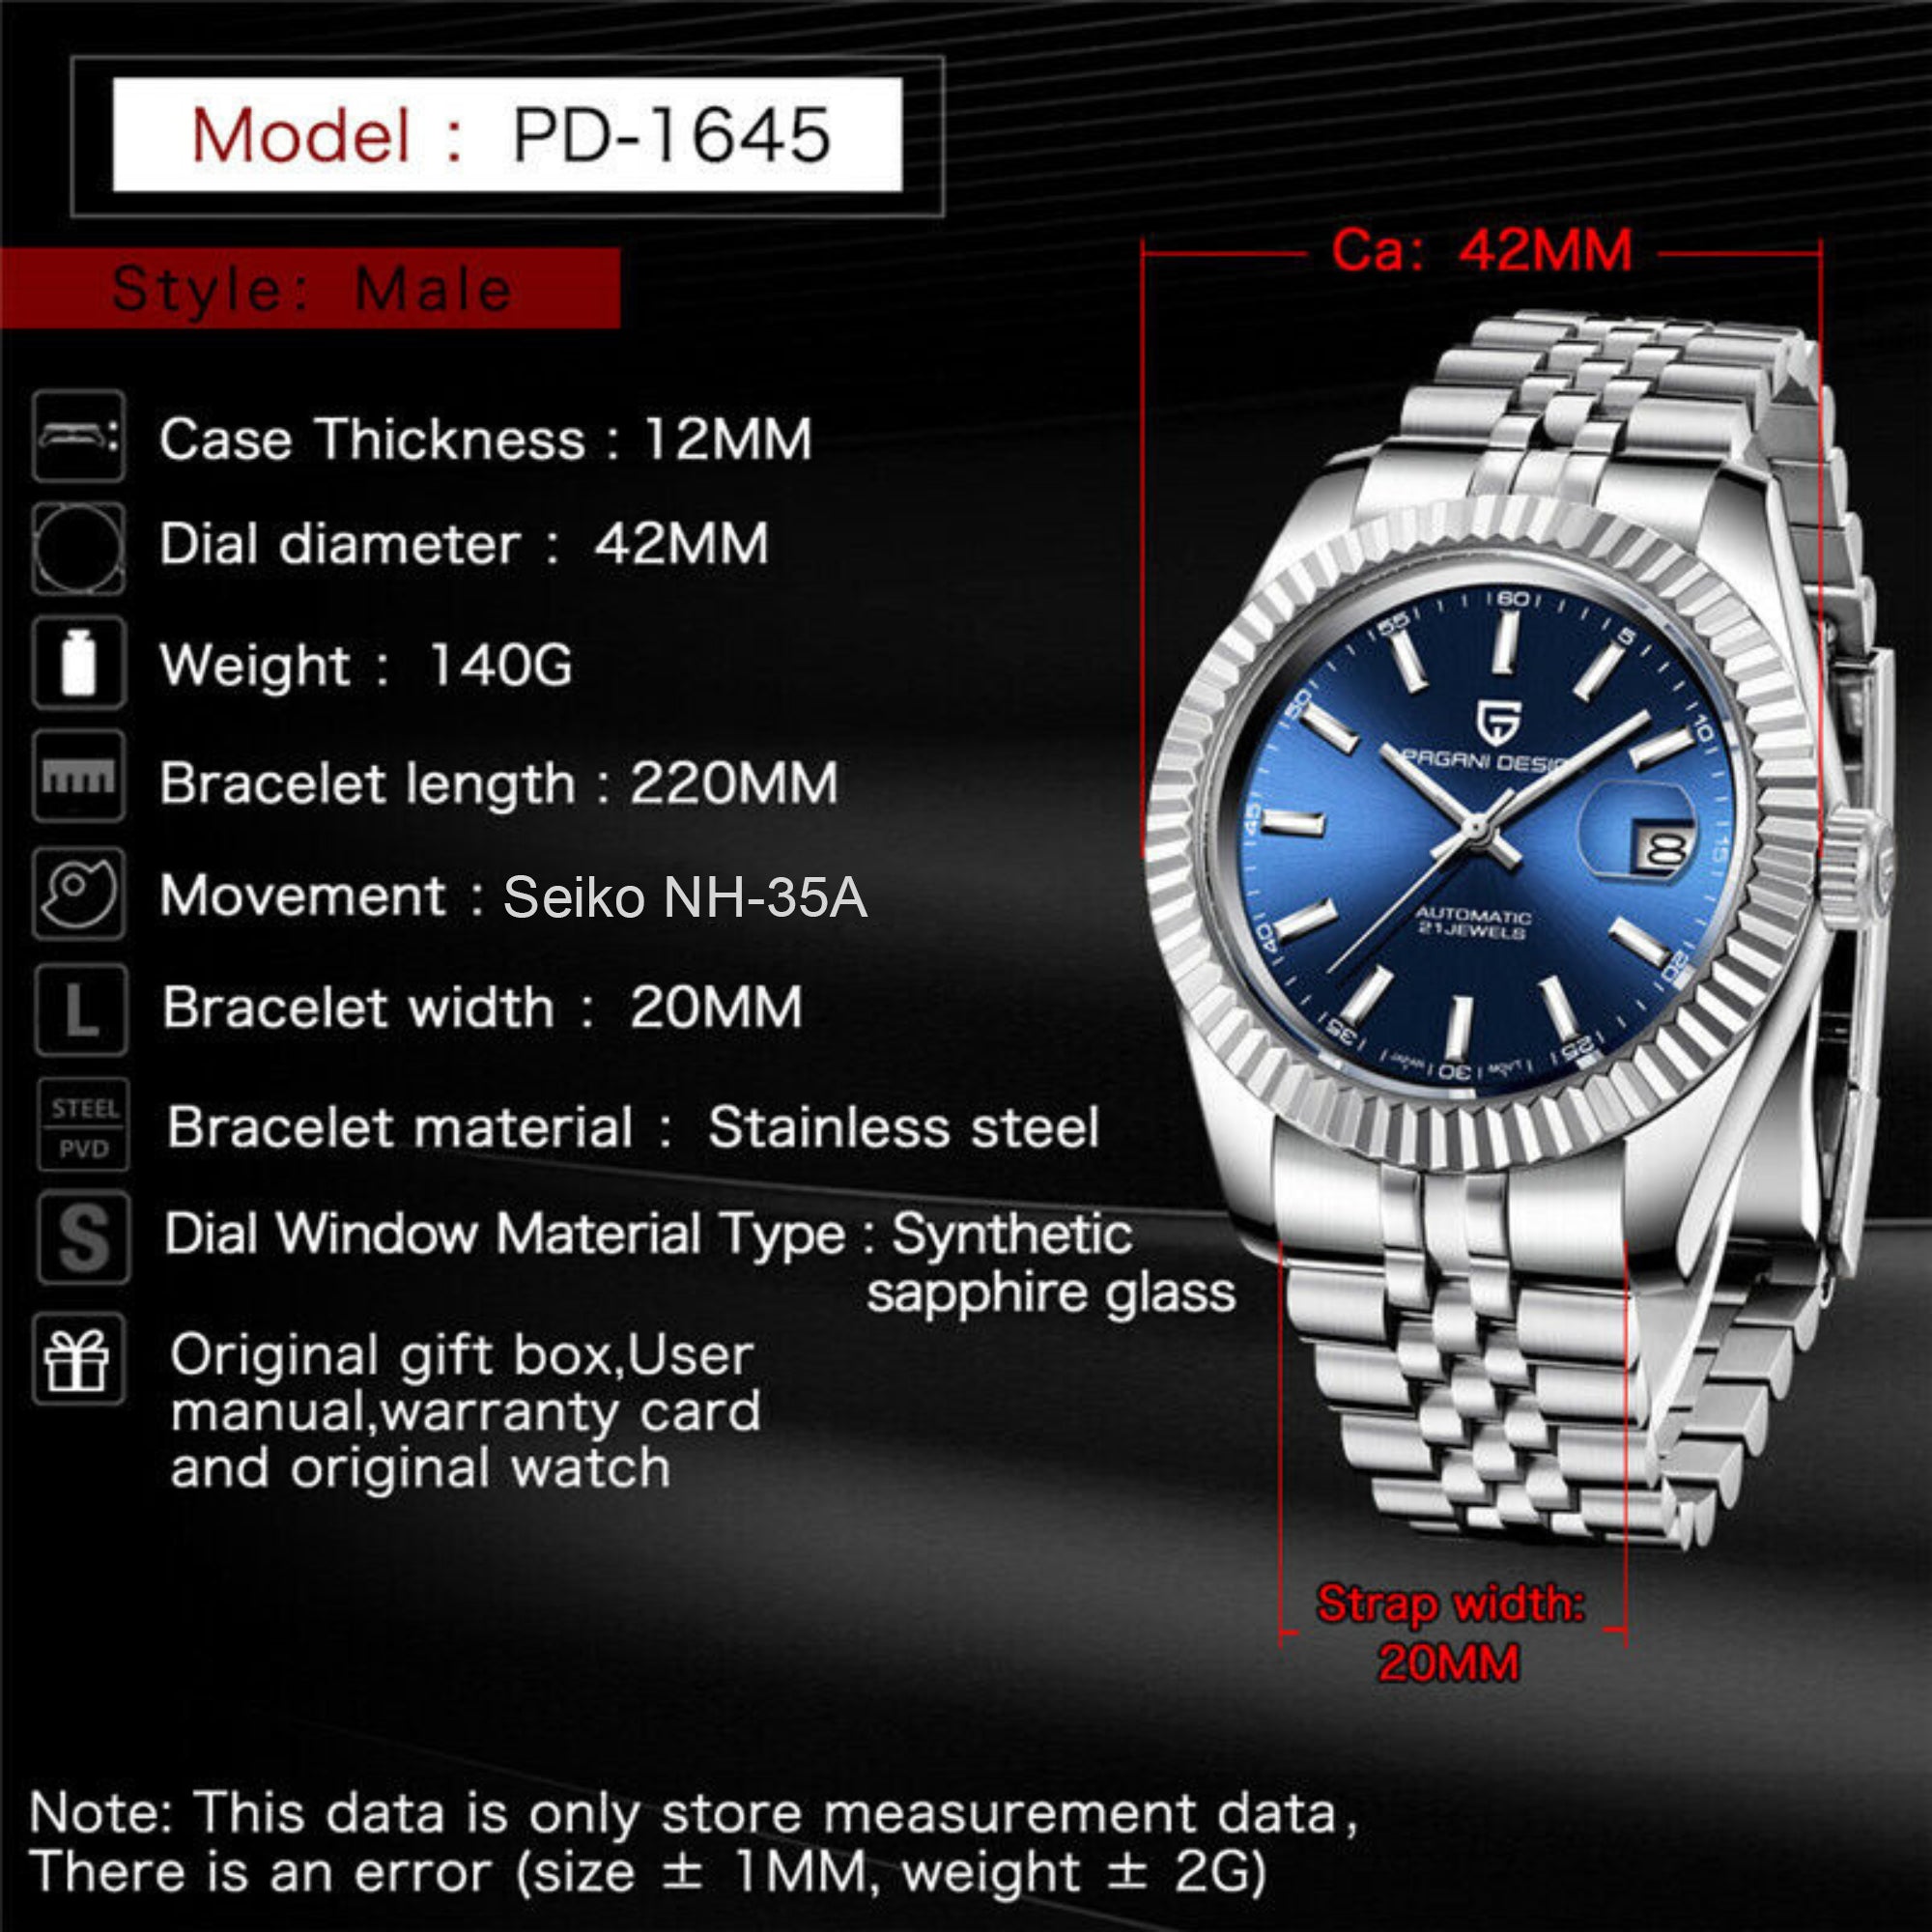 Pagani Design PD-1645 DateJust (Seiko NH-35A Automatic Movement) Mechanical Watch 200M Waterproof Watch Stainless Steel Watch Fluted Bezel (Silver Dial - Jubilee Bracelet)